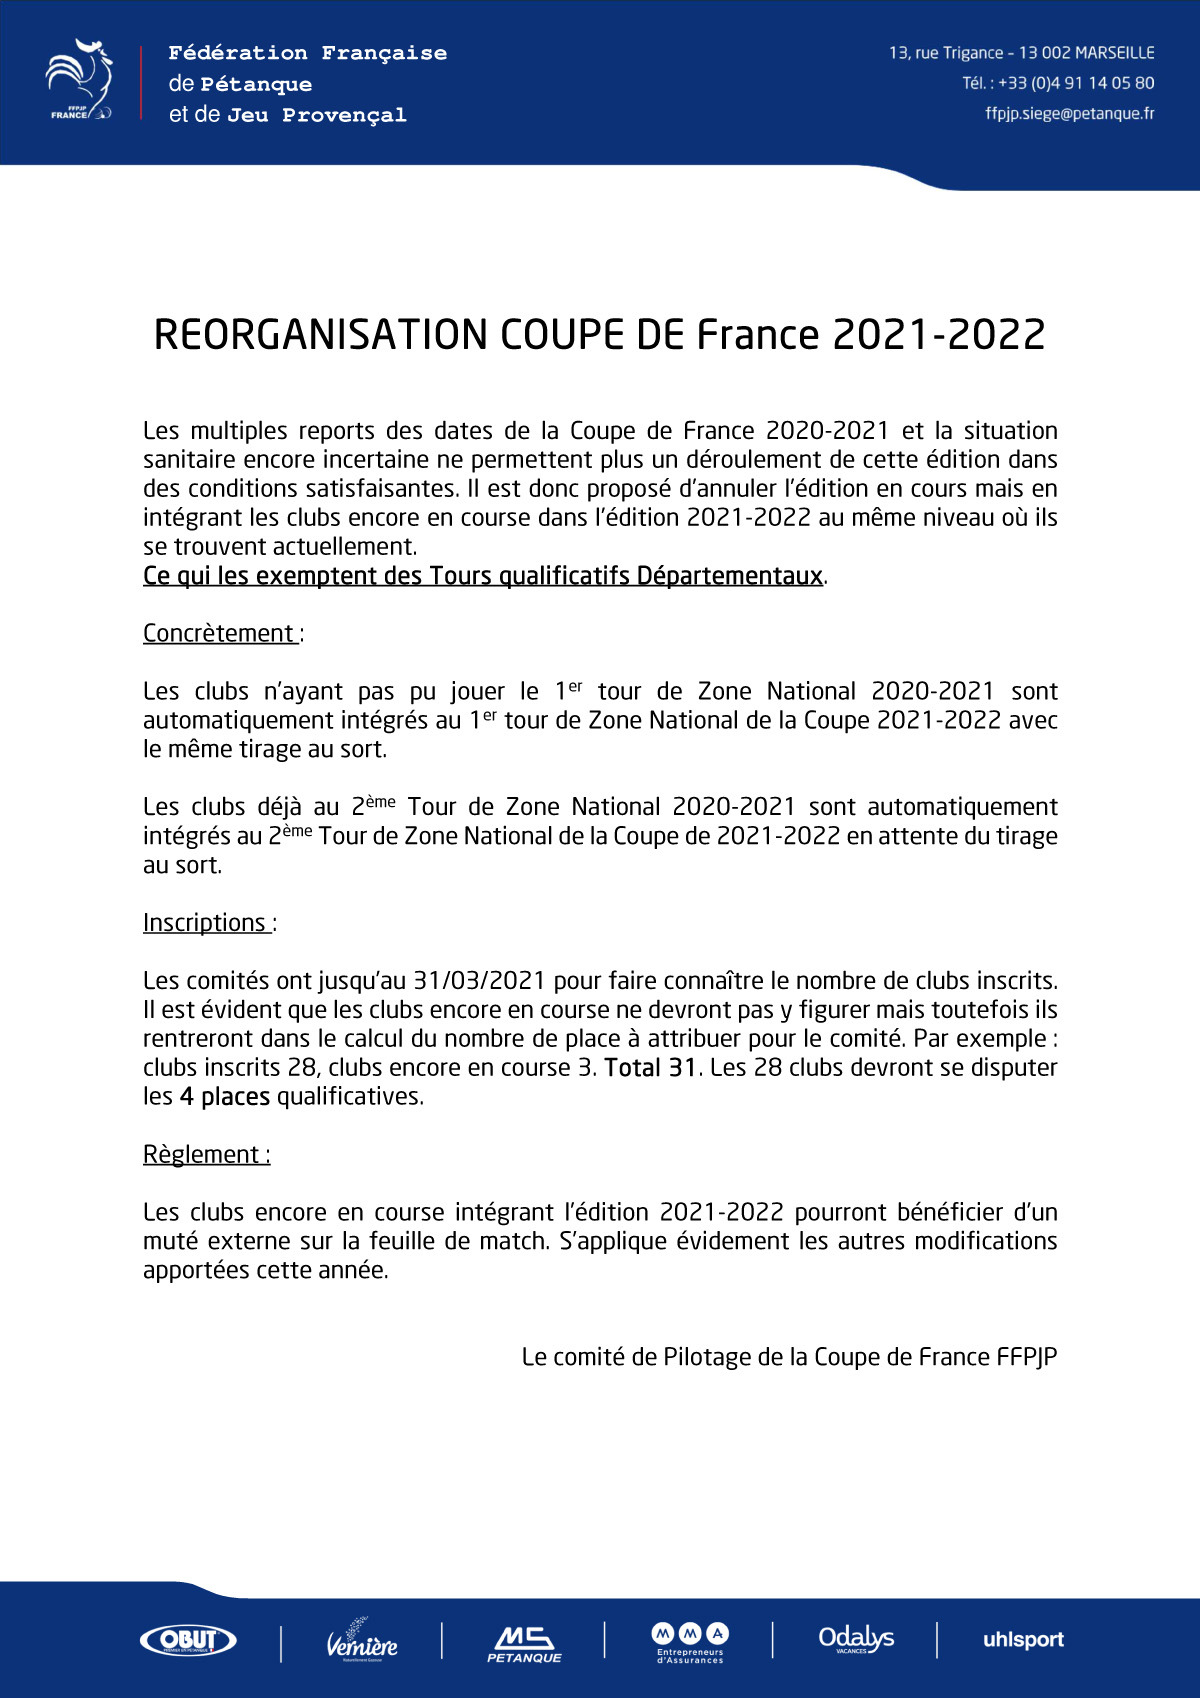 https://boulesdugard.fr/images/images/stories/CDG_2021/Rorganisation_CDF_2020-2021_1.jpg